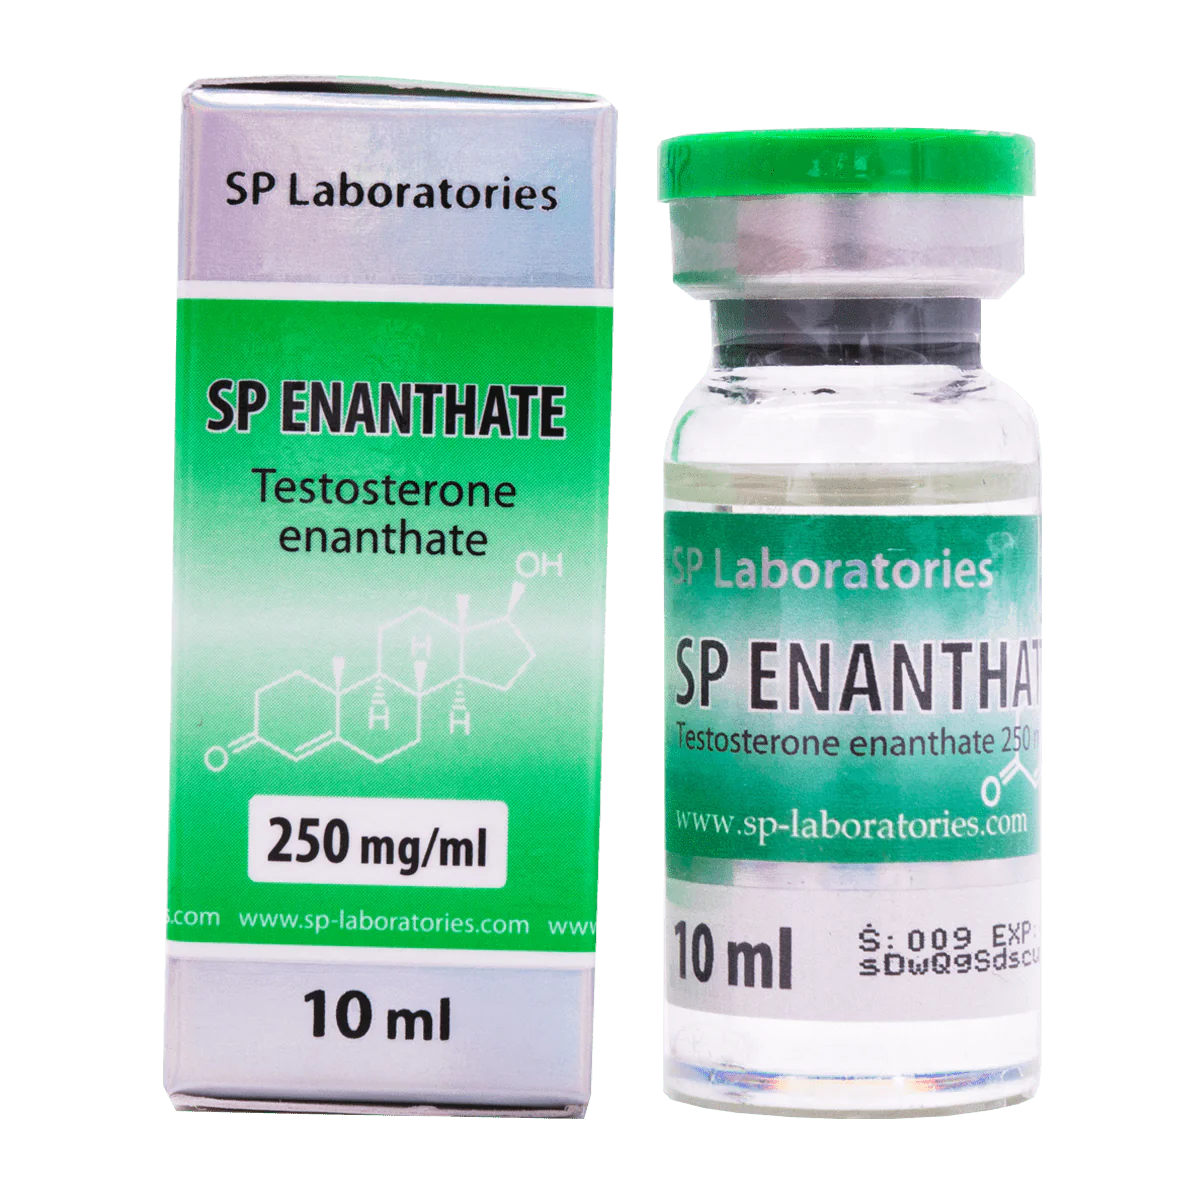 SP Enanthate 250. Testosterone Enanthate 10ml тестостерон. Тестостерон энантат SP Laboratories. Тестостерон энантат 250 мг. Энантат купить в аптеке цена